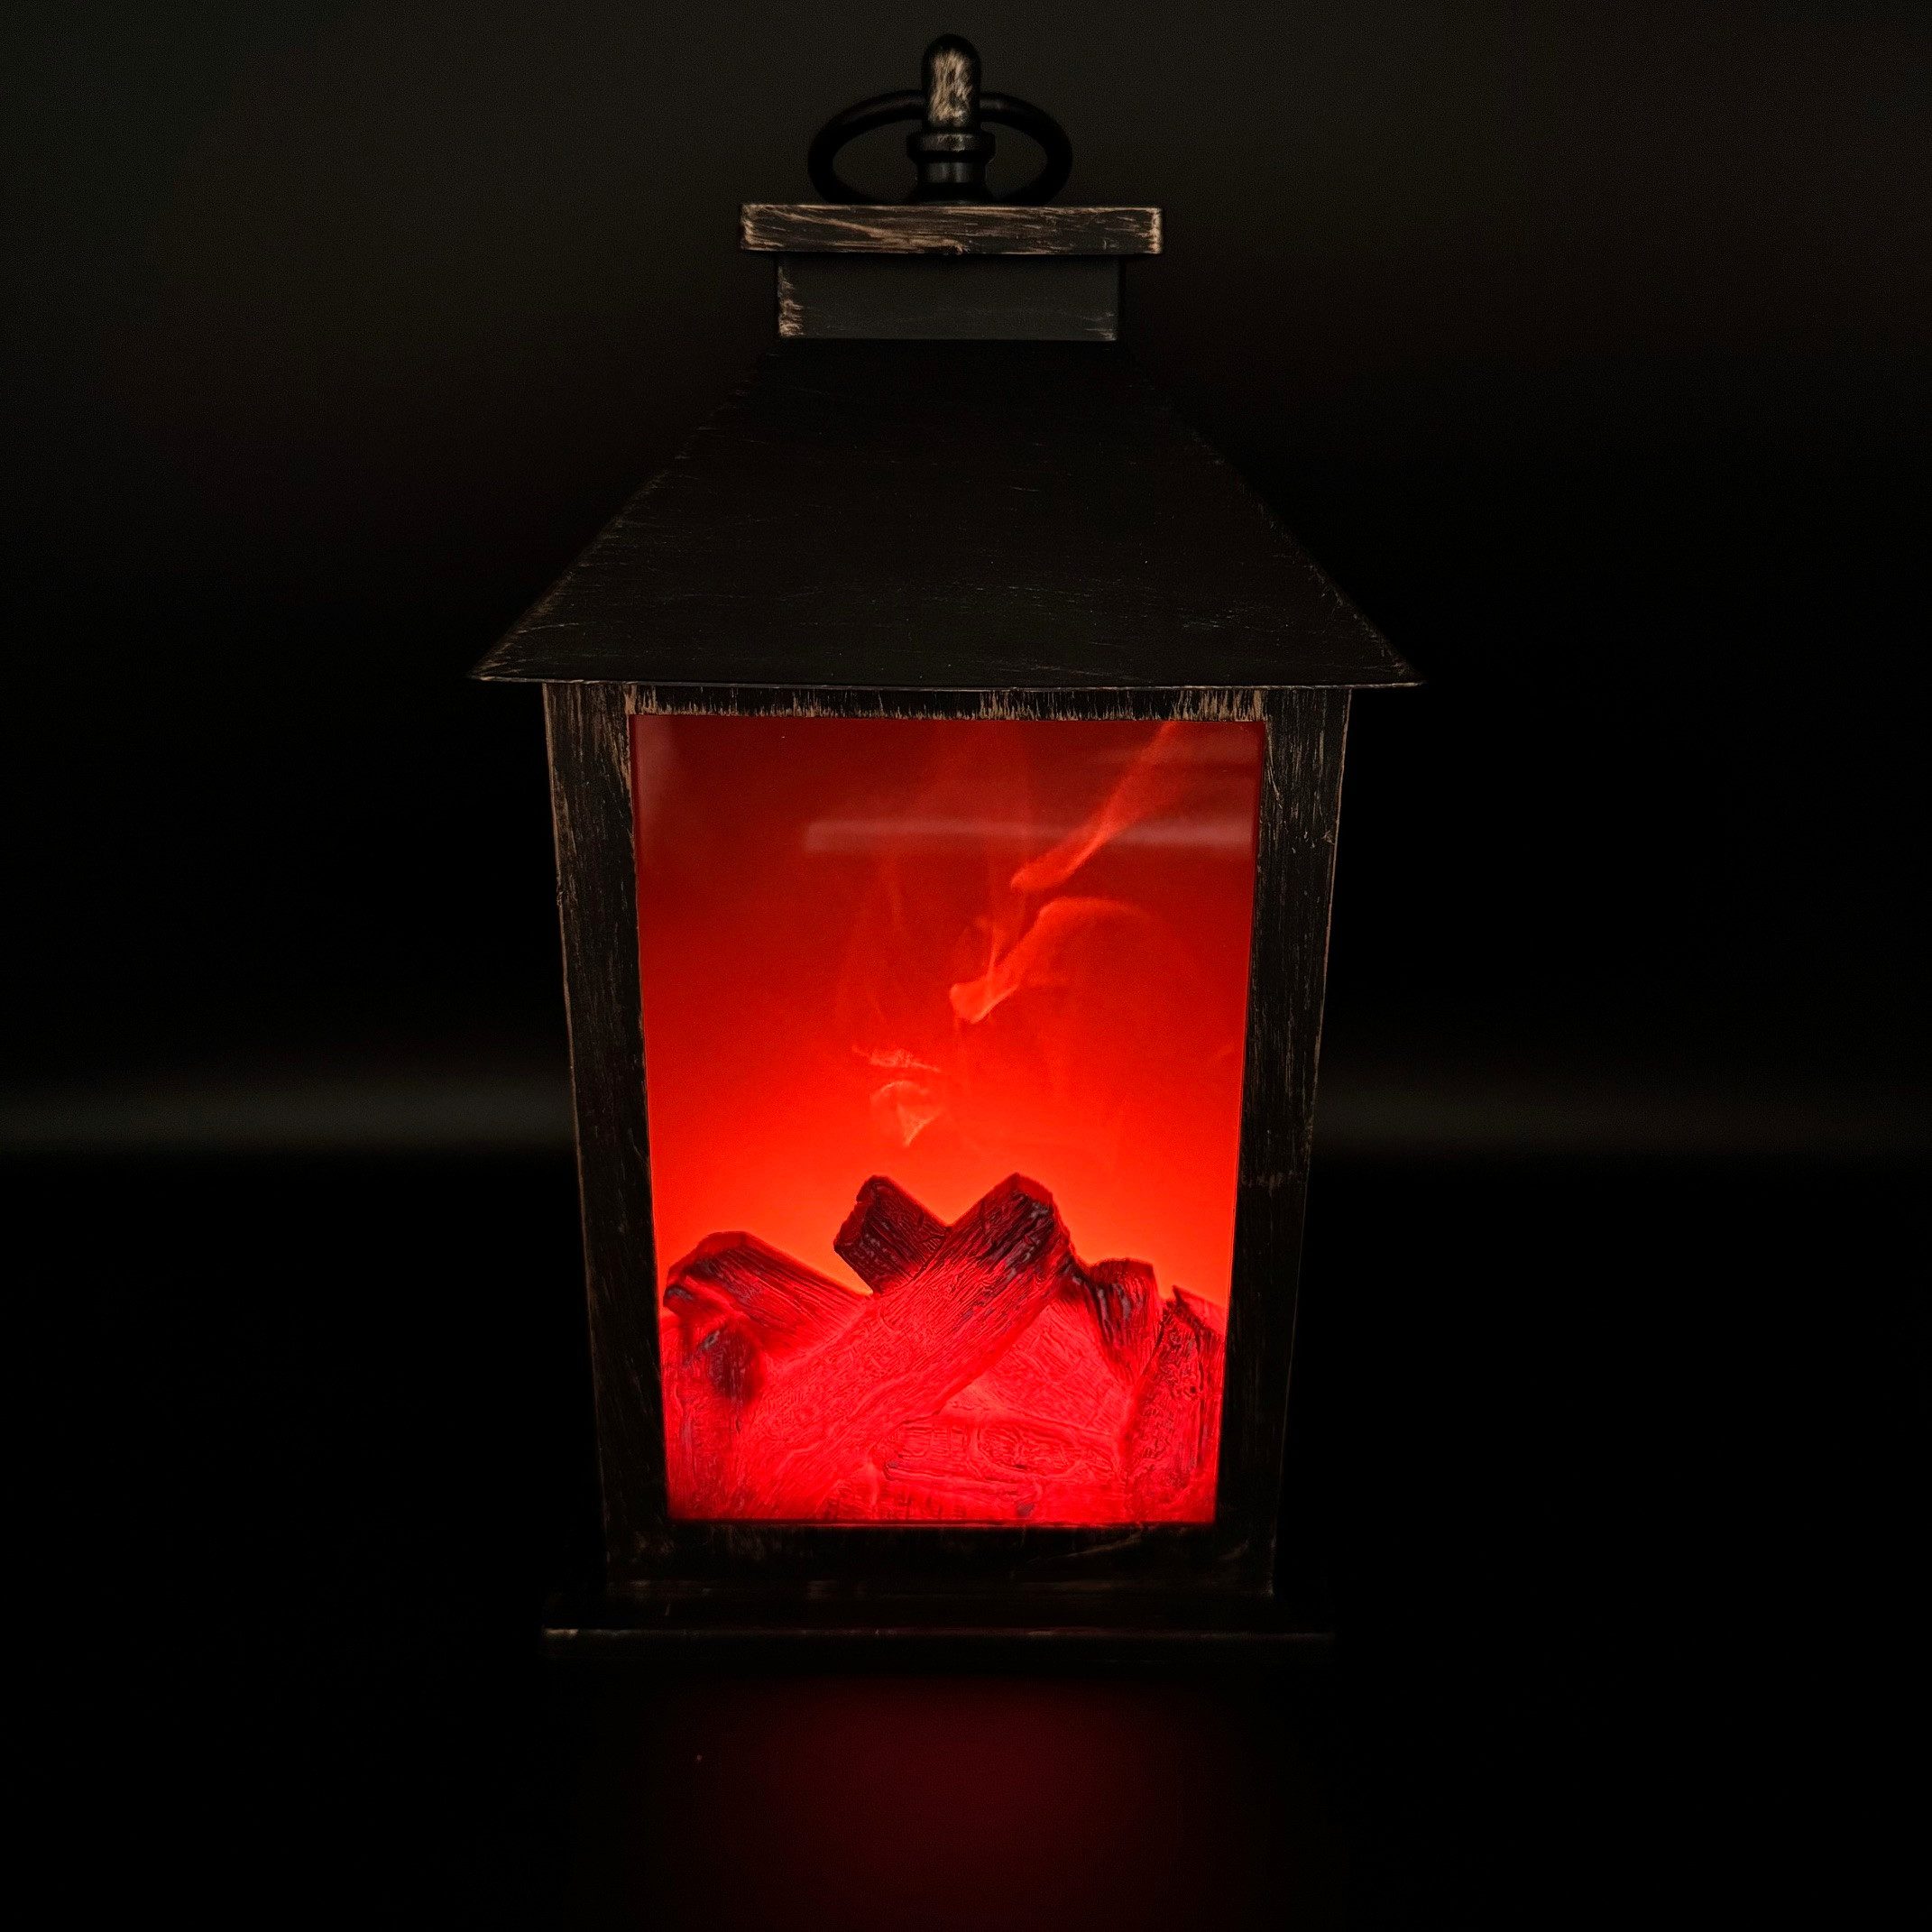 Online-Fuchs LED Laterne Deko Kaminlaterne mit 6-Stunden Timerfunktion - Vintage look, LED fest integriert, rötliches LED-Feuer, 27 cm groß